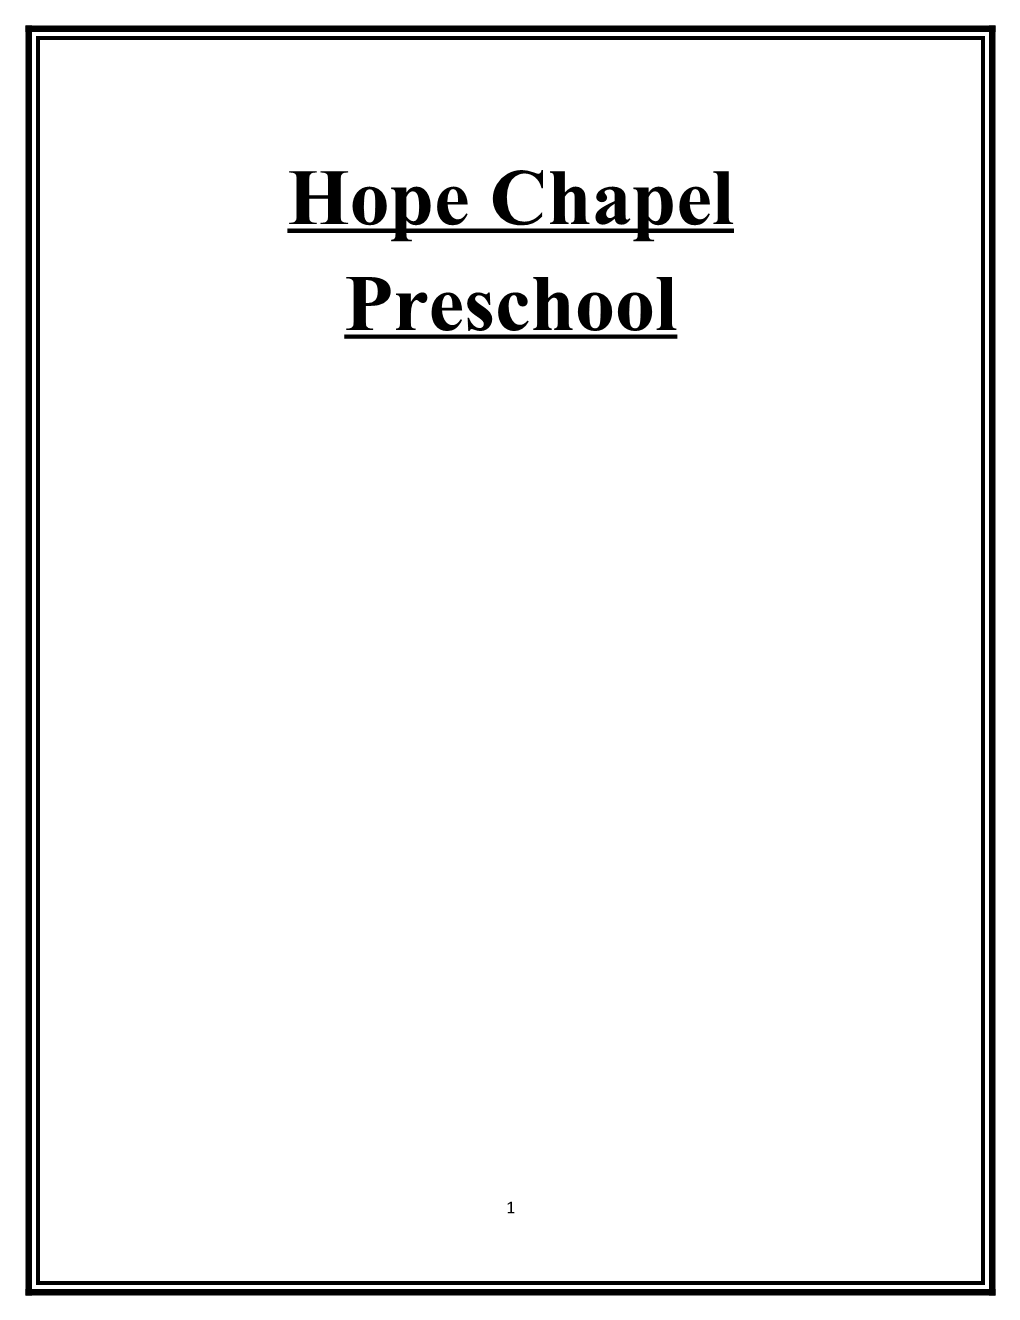 Hope Chapel Preschool